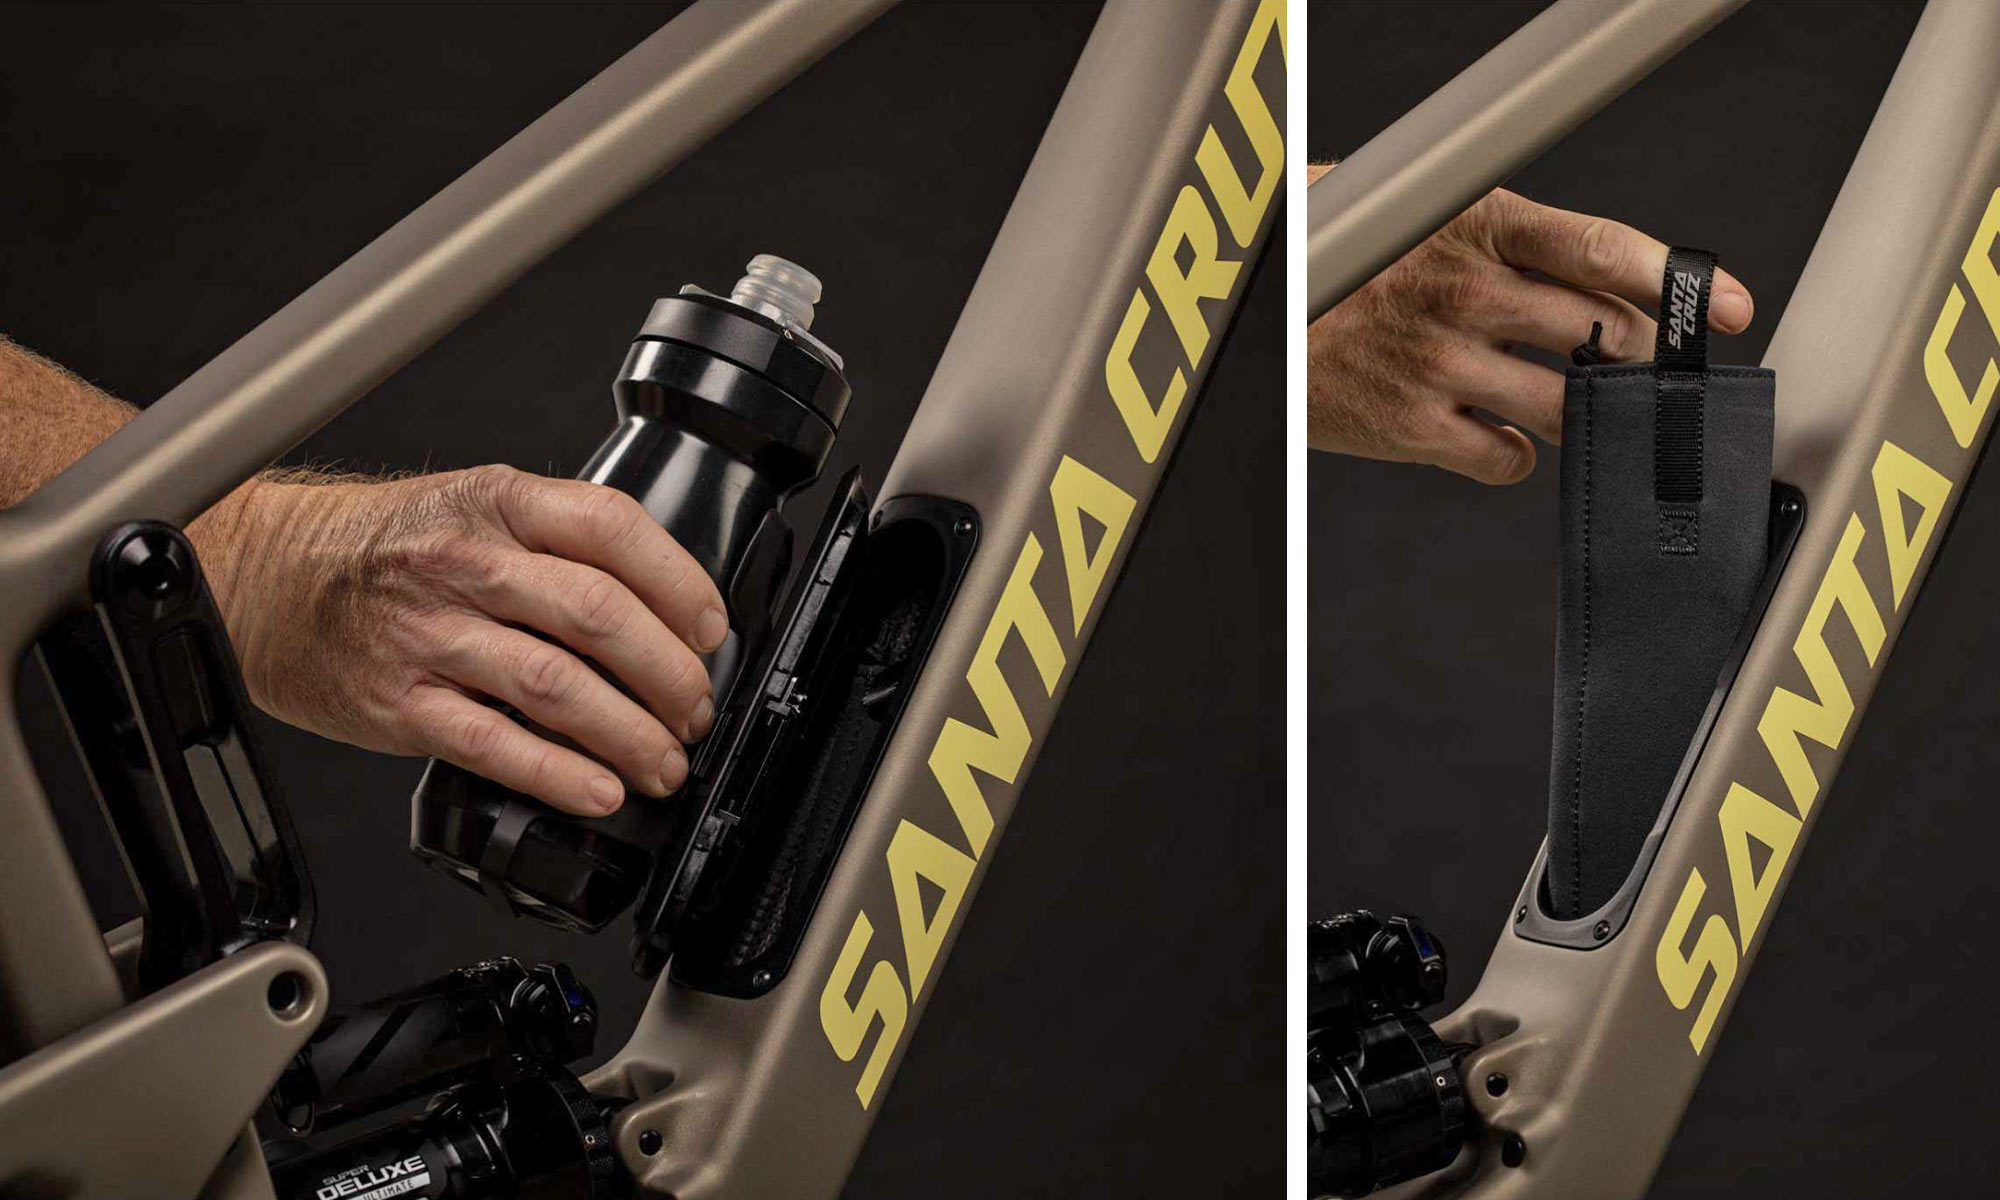 2023 Santa Cruz 5010 Carbon MX 130mm VPP mullet trail bike, Glovebox detail